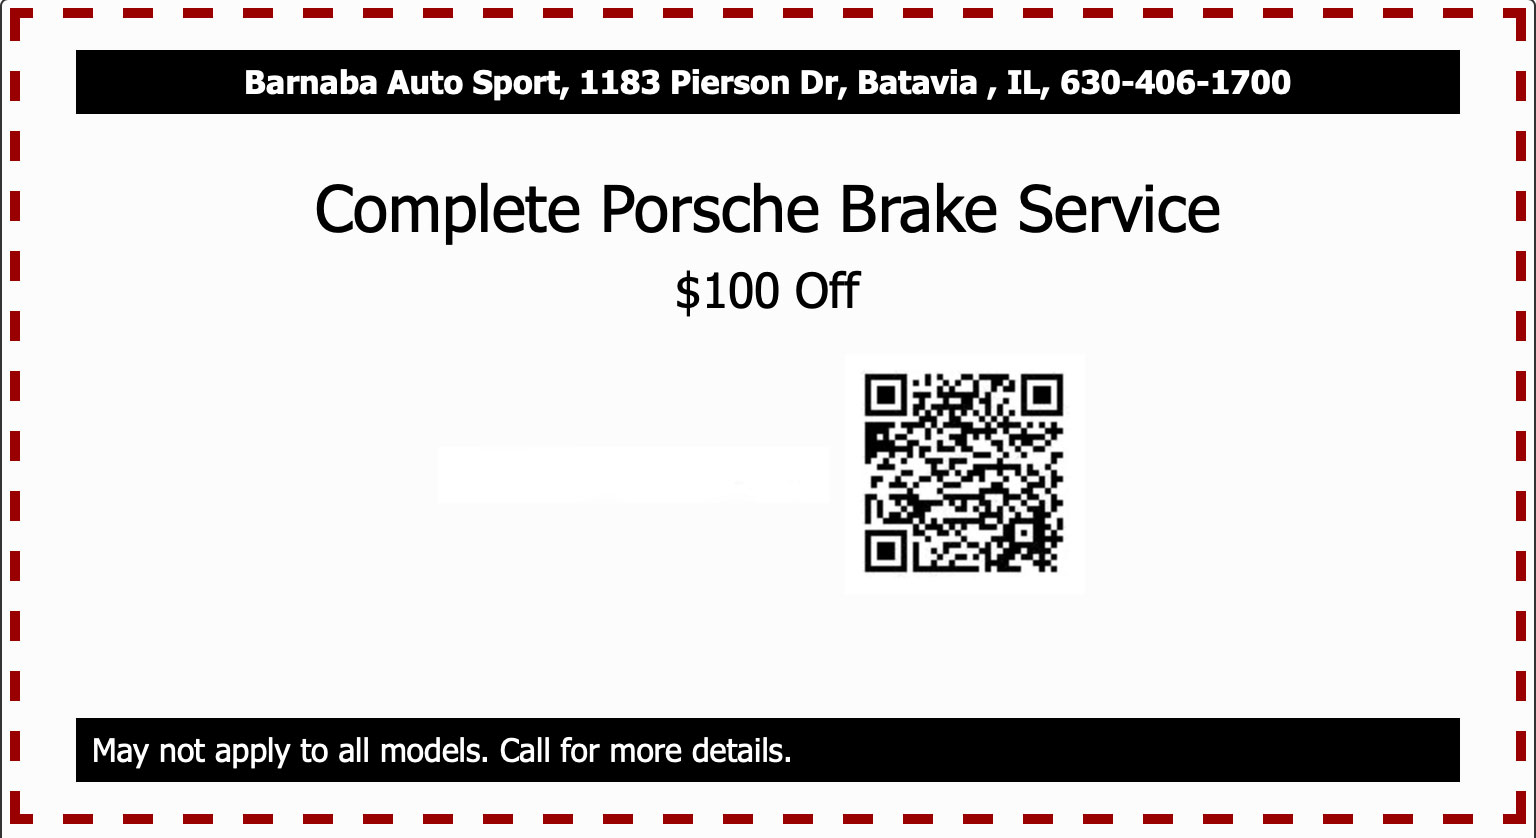 Complete Porsche Brake Service